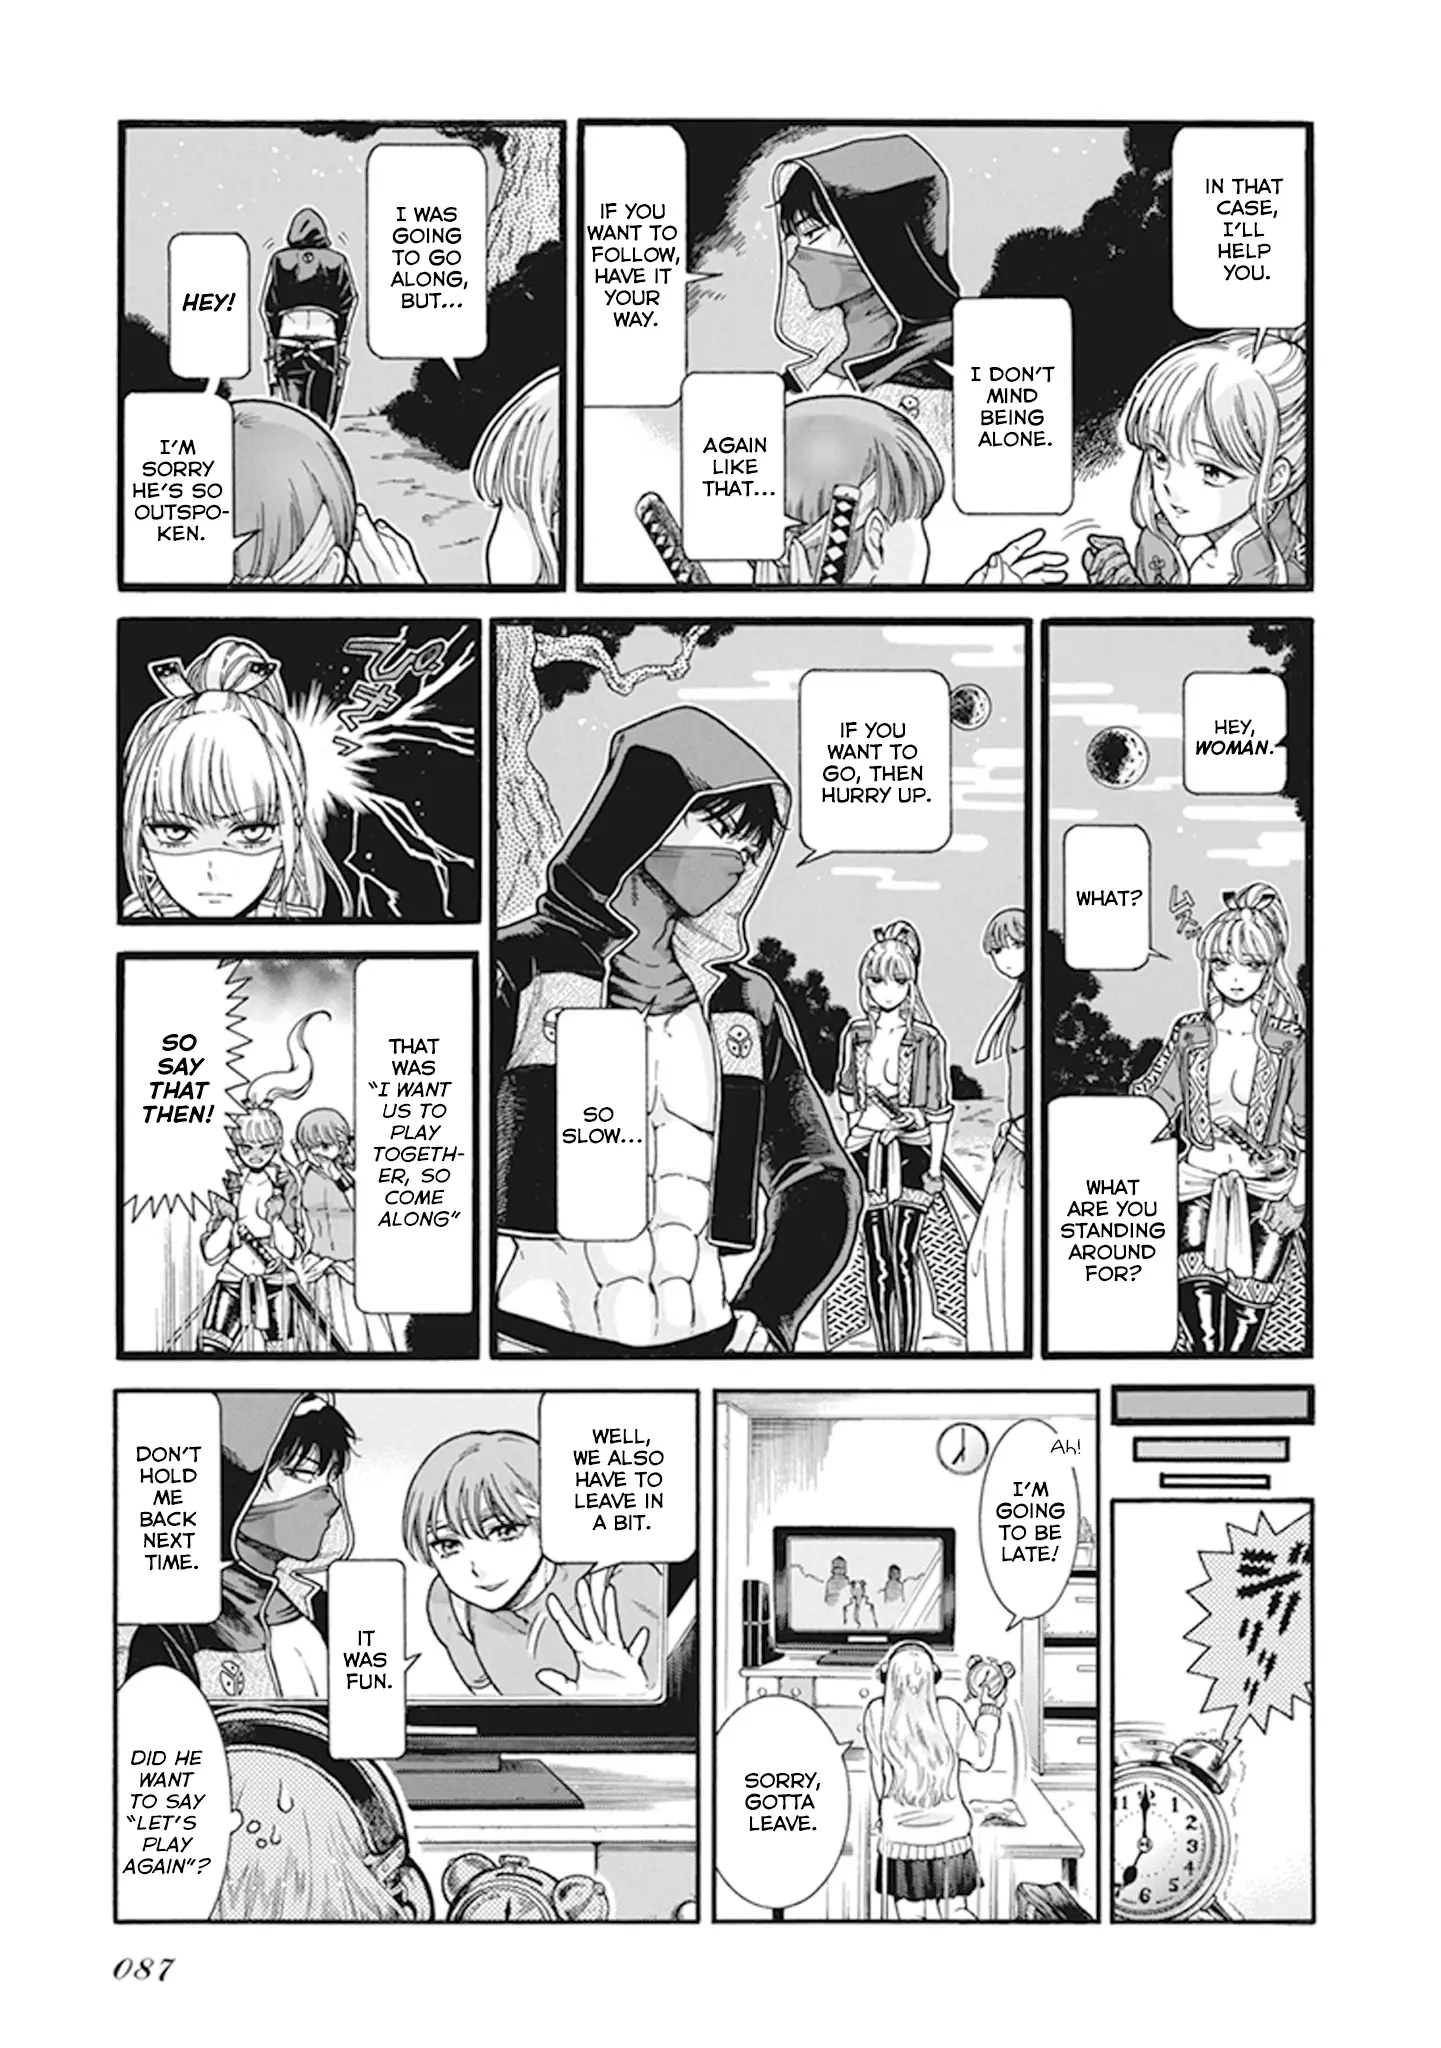 Glamorous Gathering Takahashi - 6.4 page 3-6c89a690